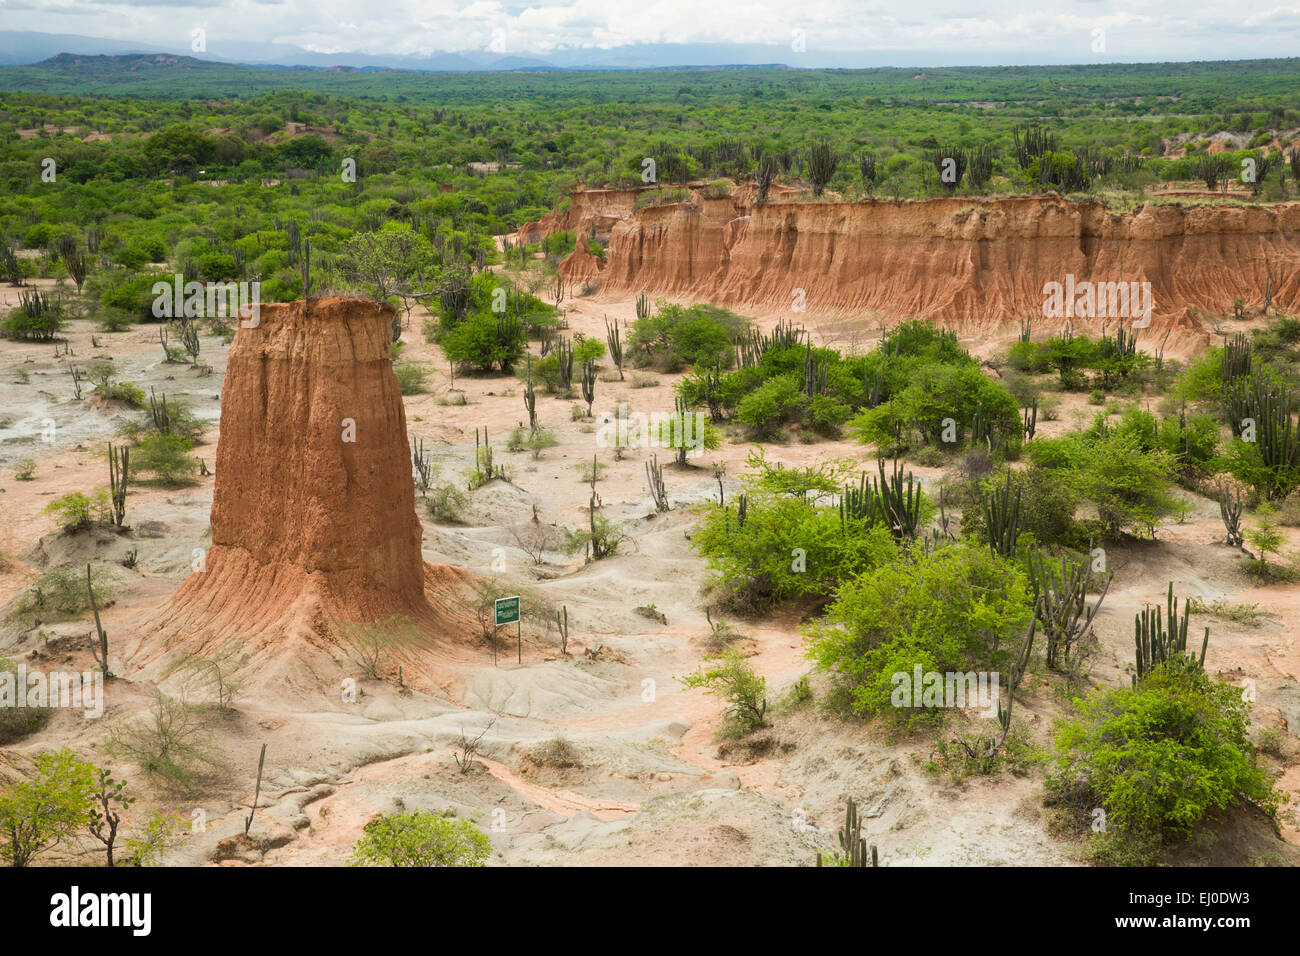 South America, Latin America, Colombia, nature, Tatacao, desert, rock formations, Huila, erosion, national park, Stock Photo